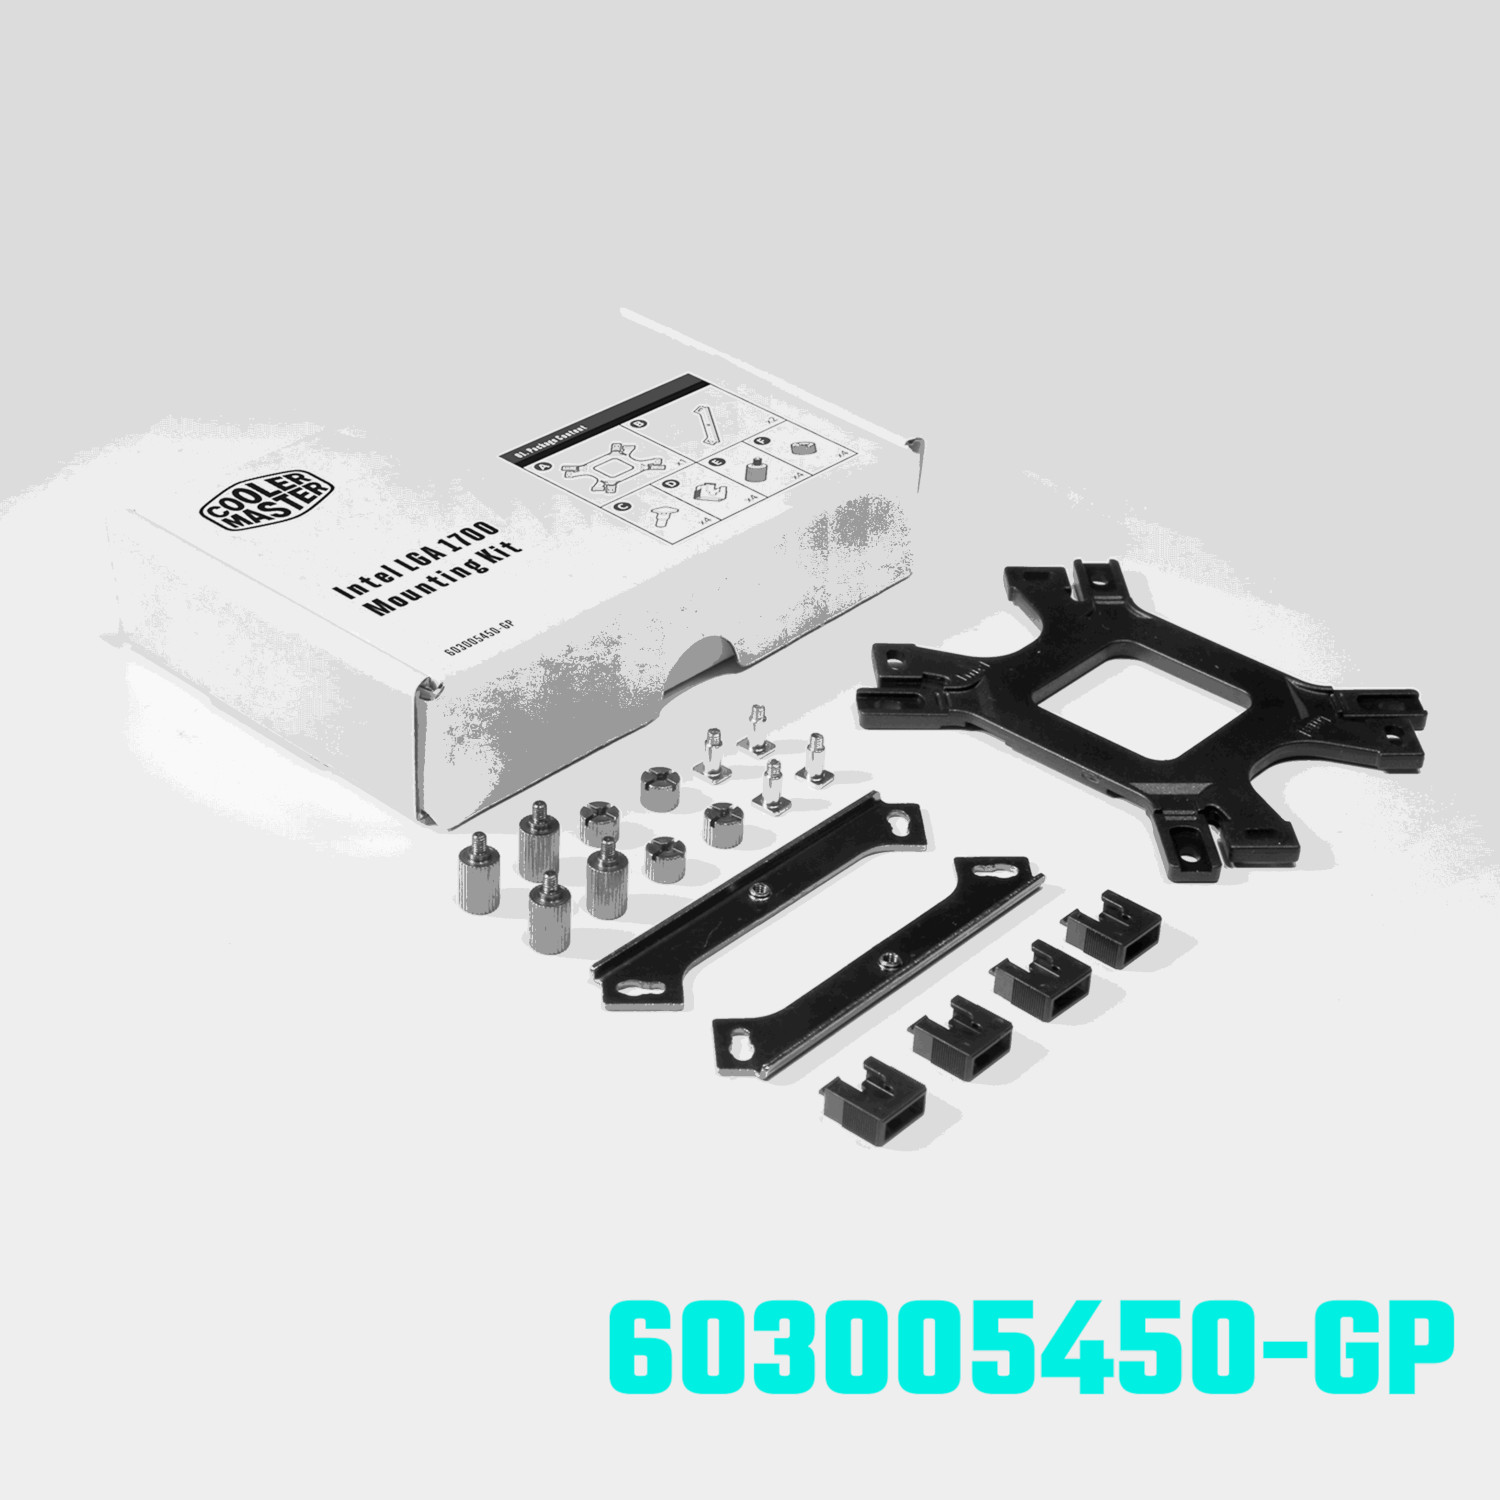 Coolermaster - 603005450-GP -   